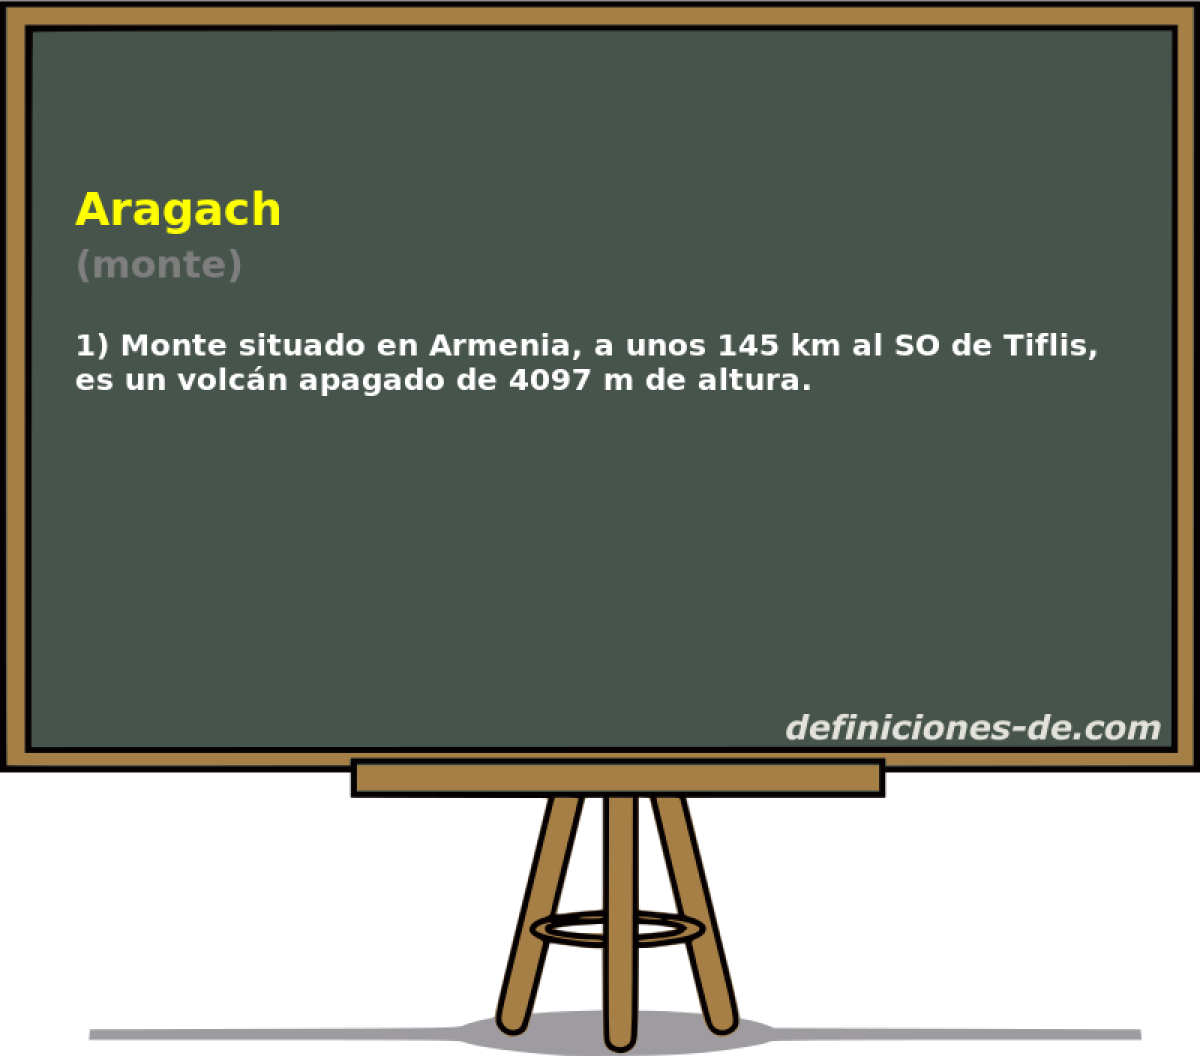 Aragach (monte)